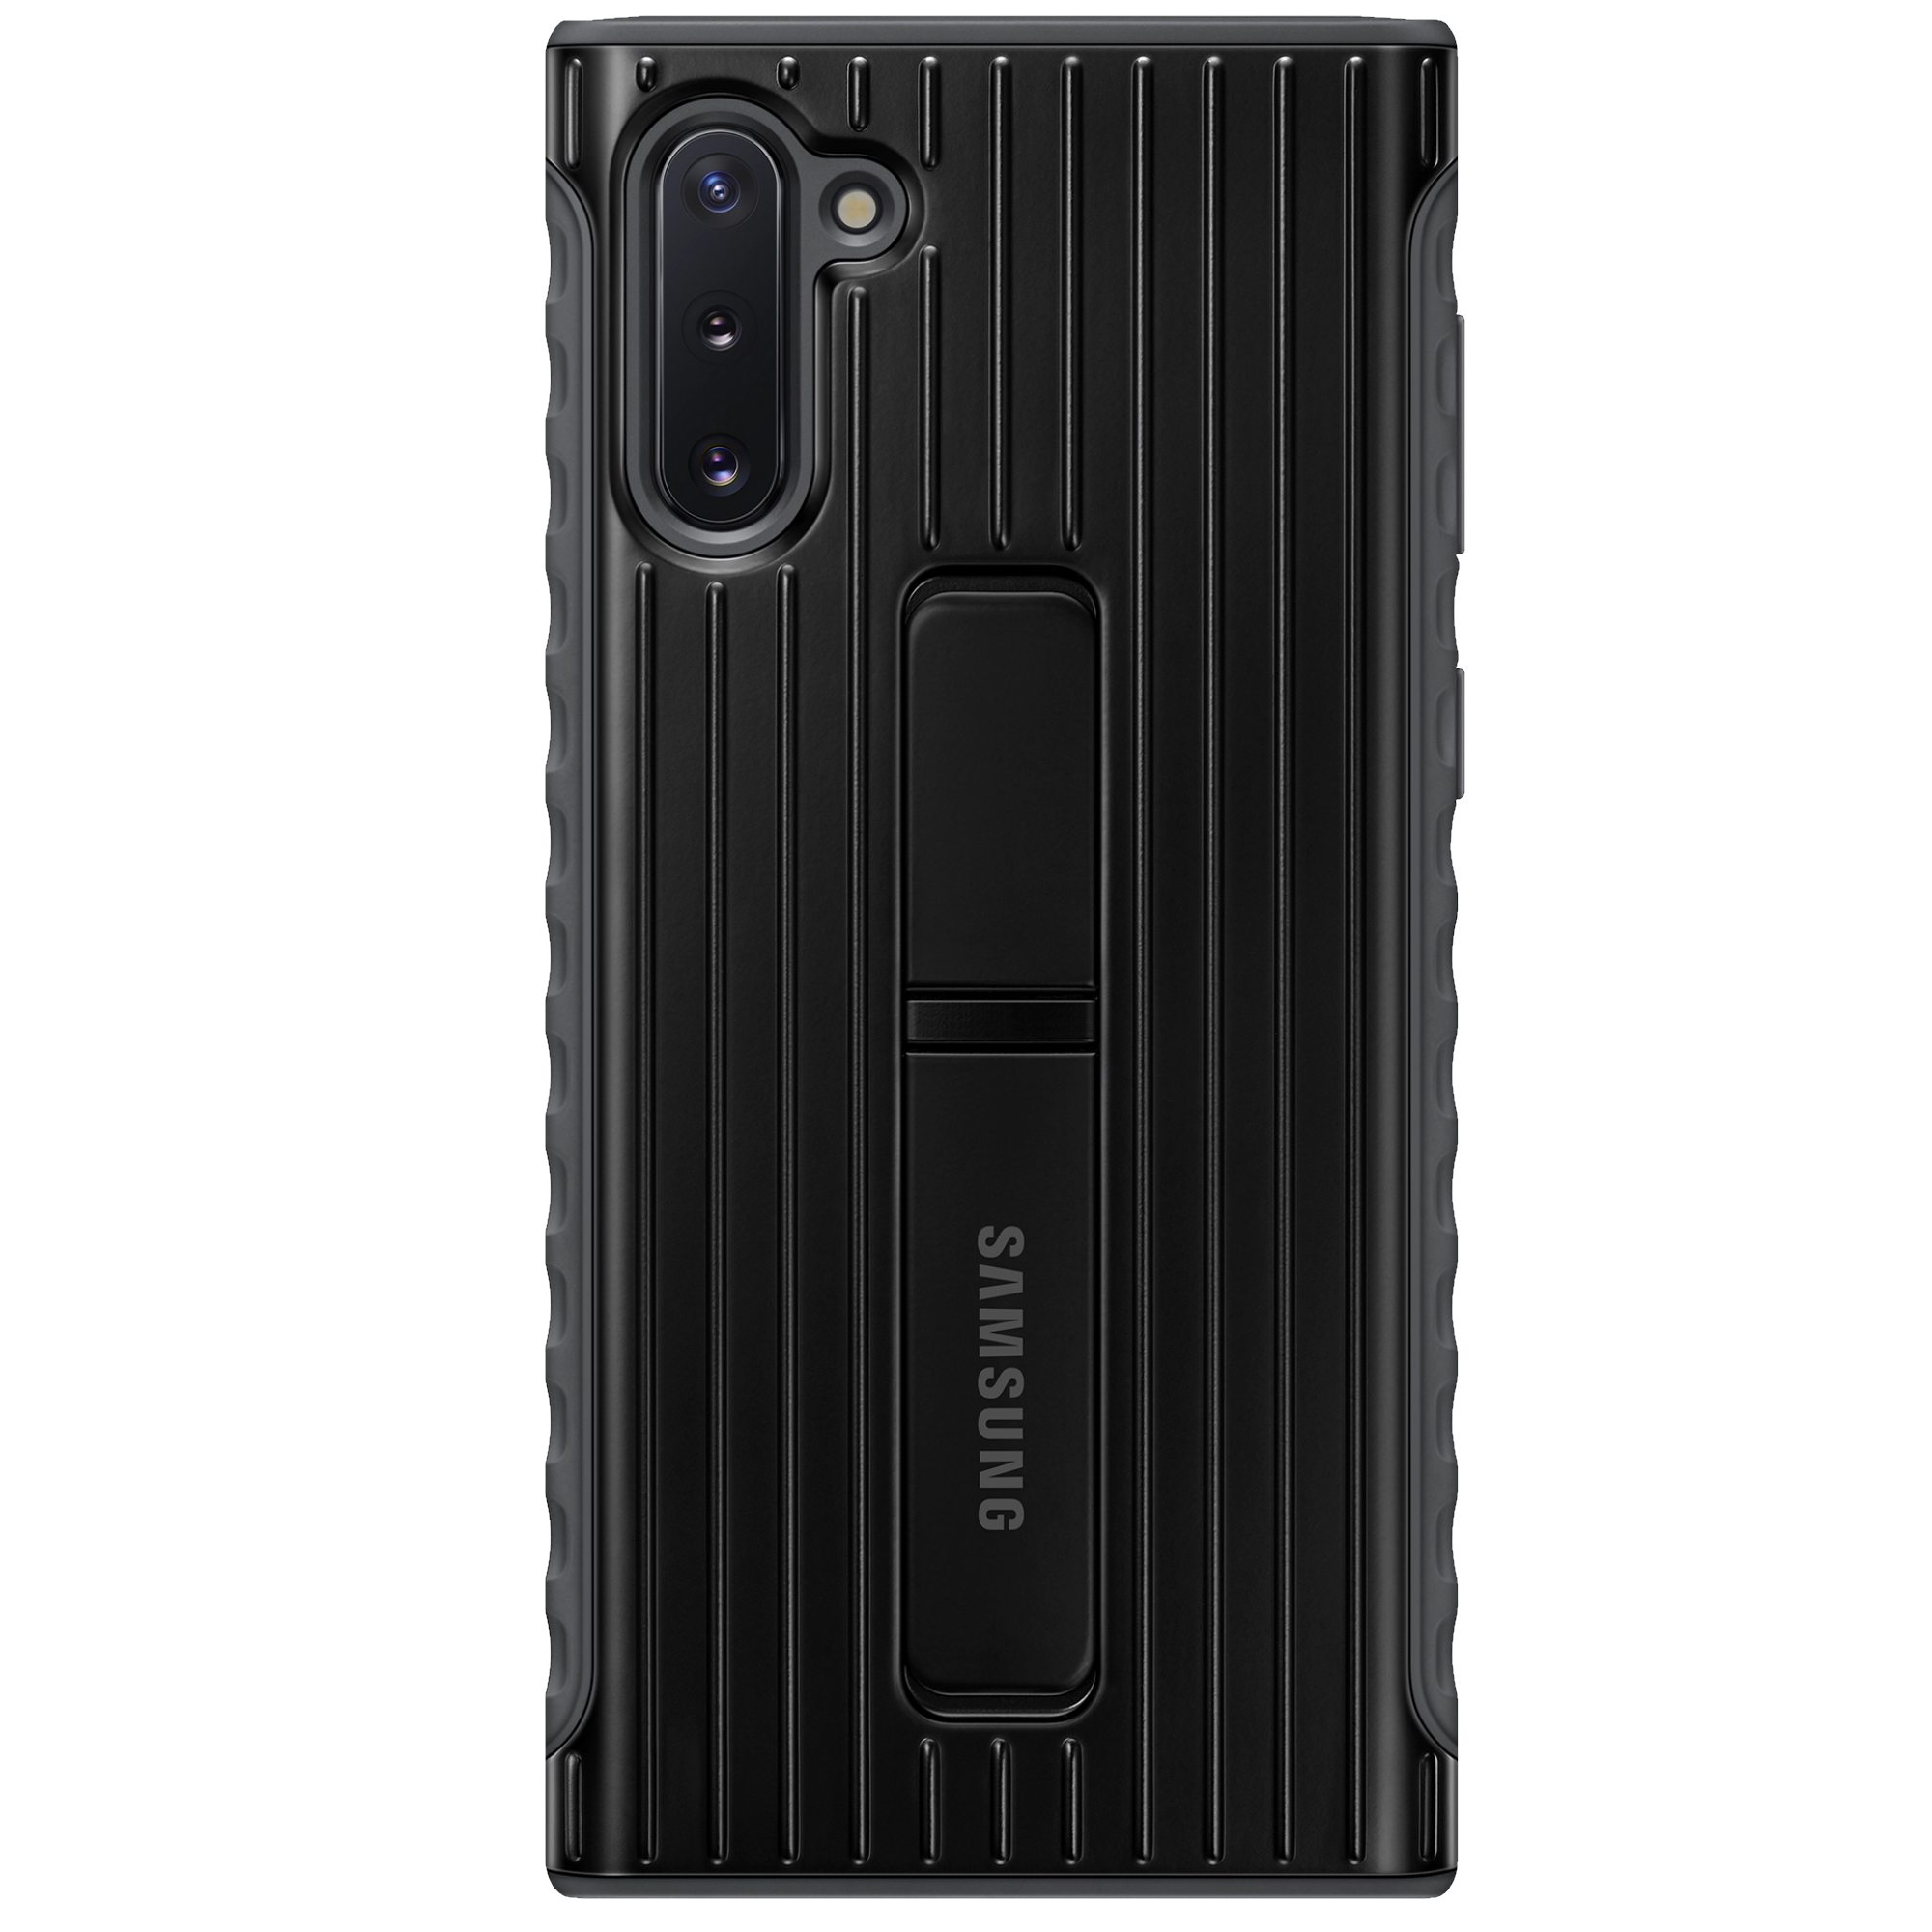 Capaca protectie spate Samsung Protective Cover EF-RN970 pentru Galaxy Note 10 (N970) Black